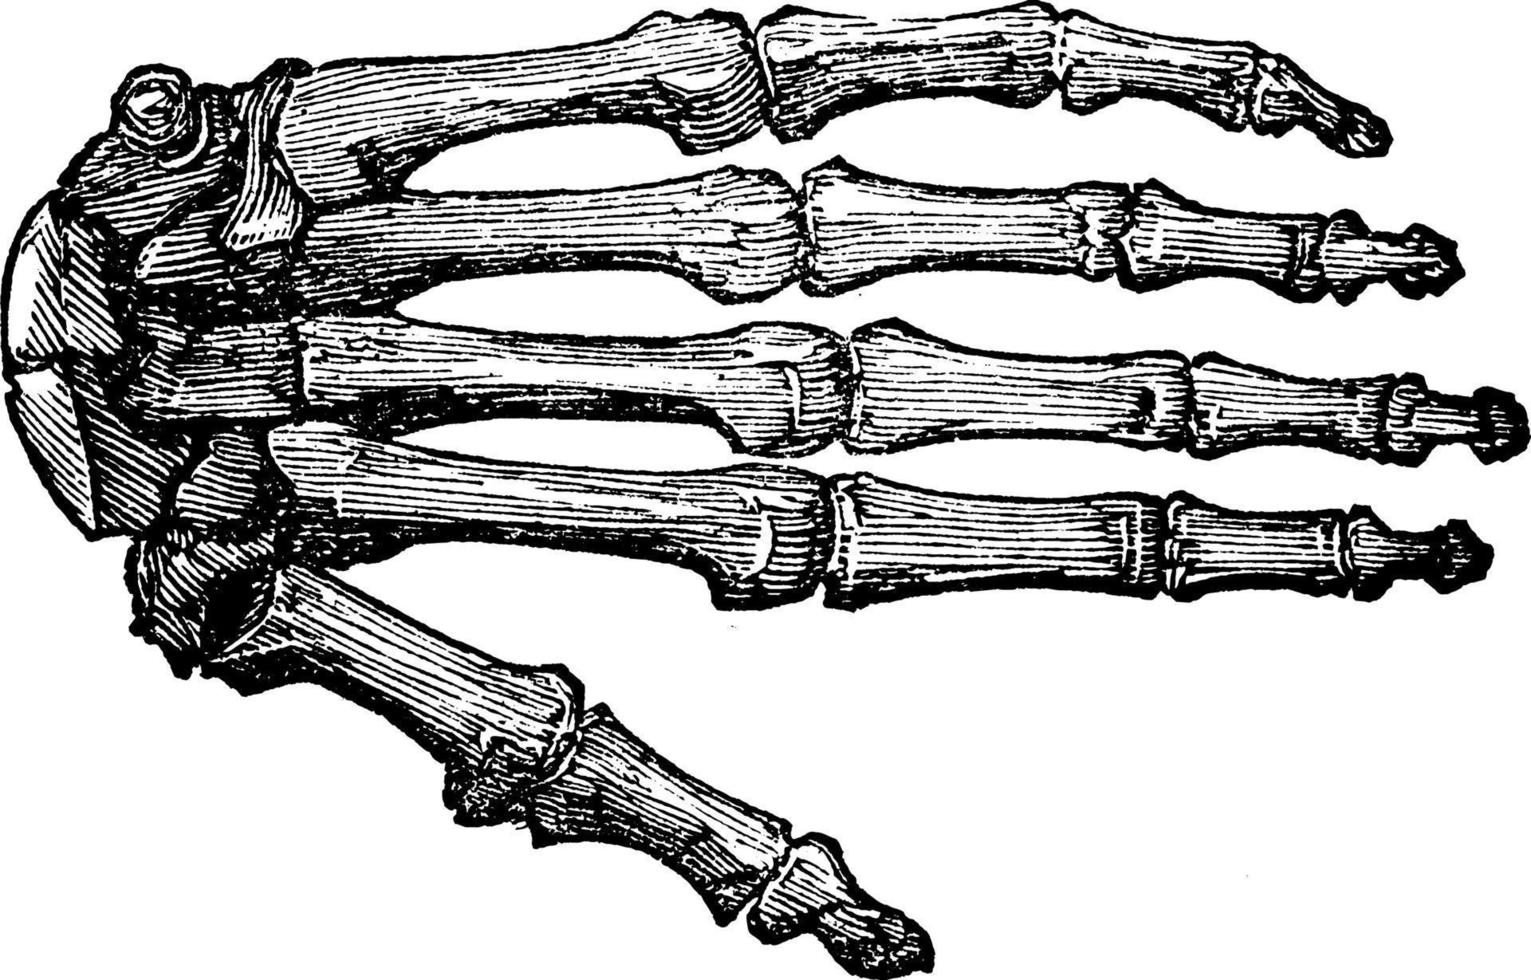 Knochen der Hand, Vintage Illustration vektor